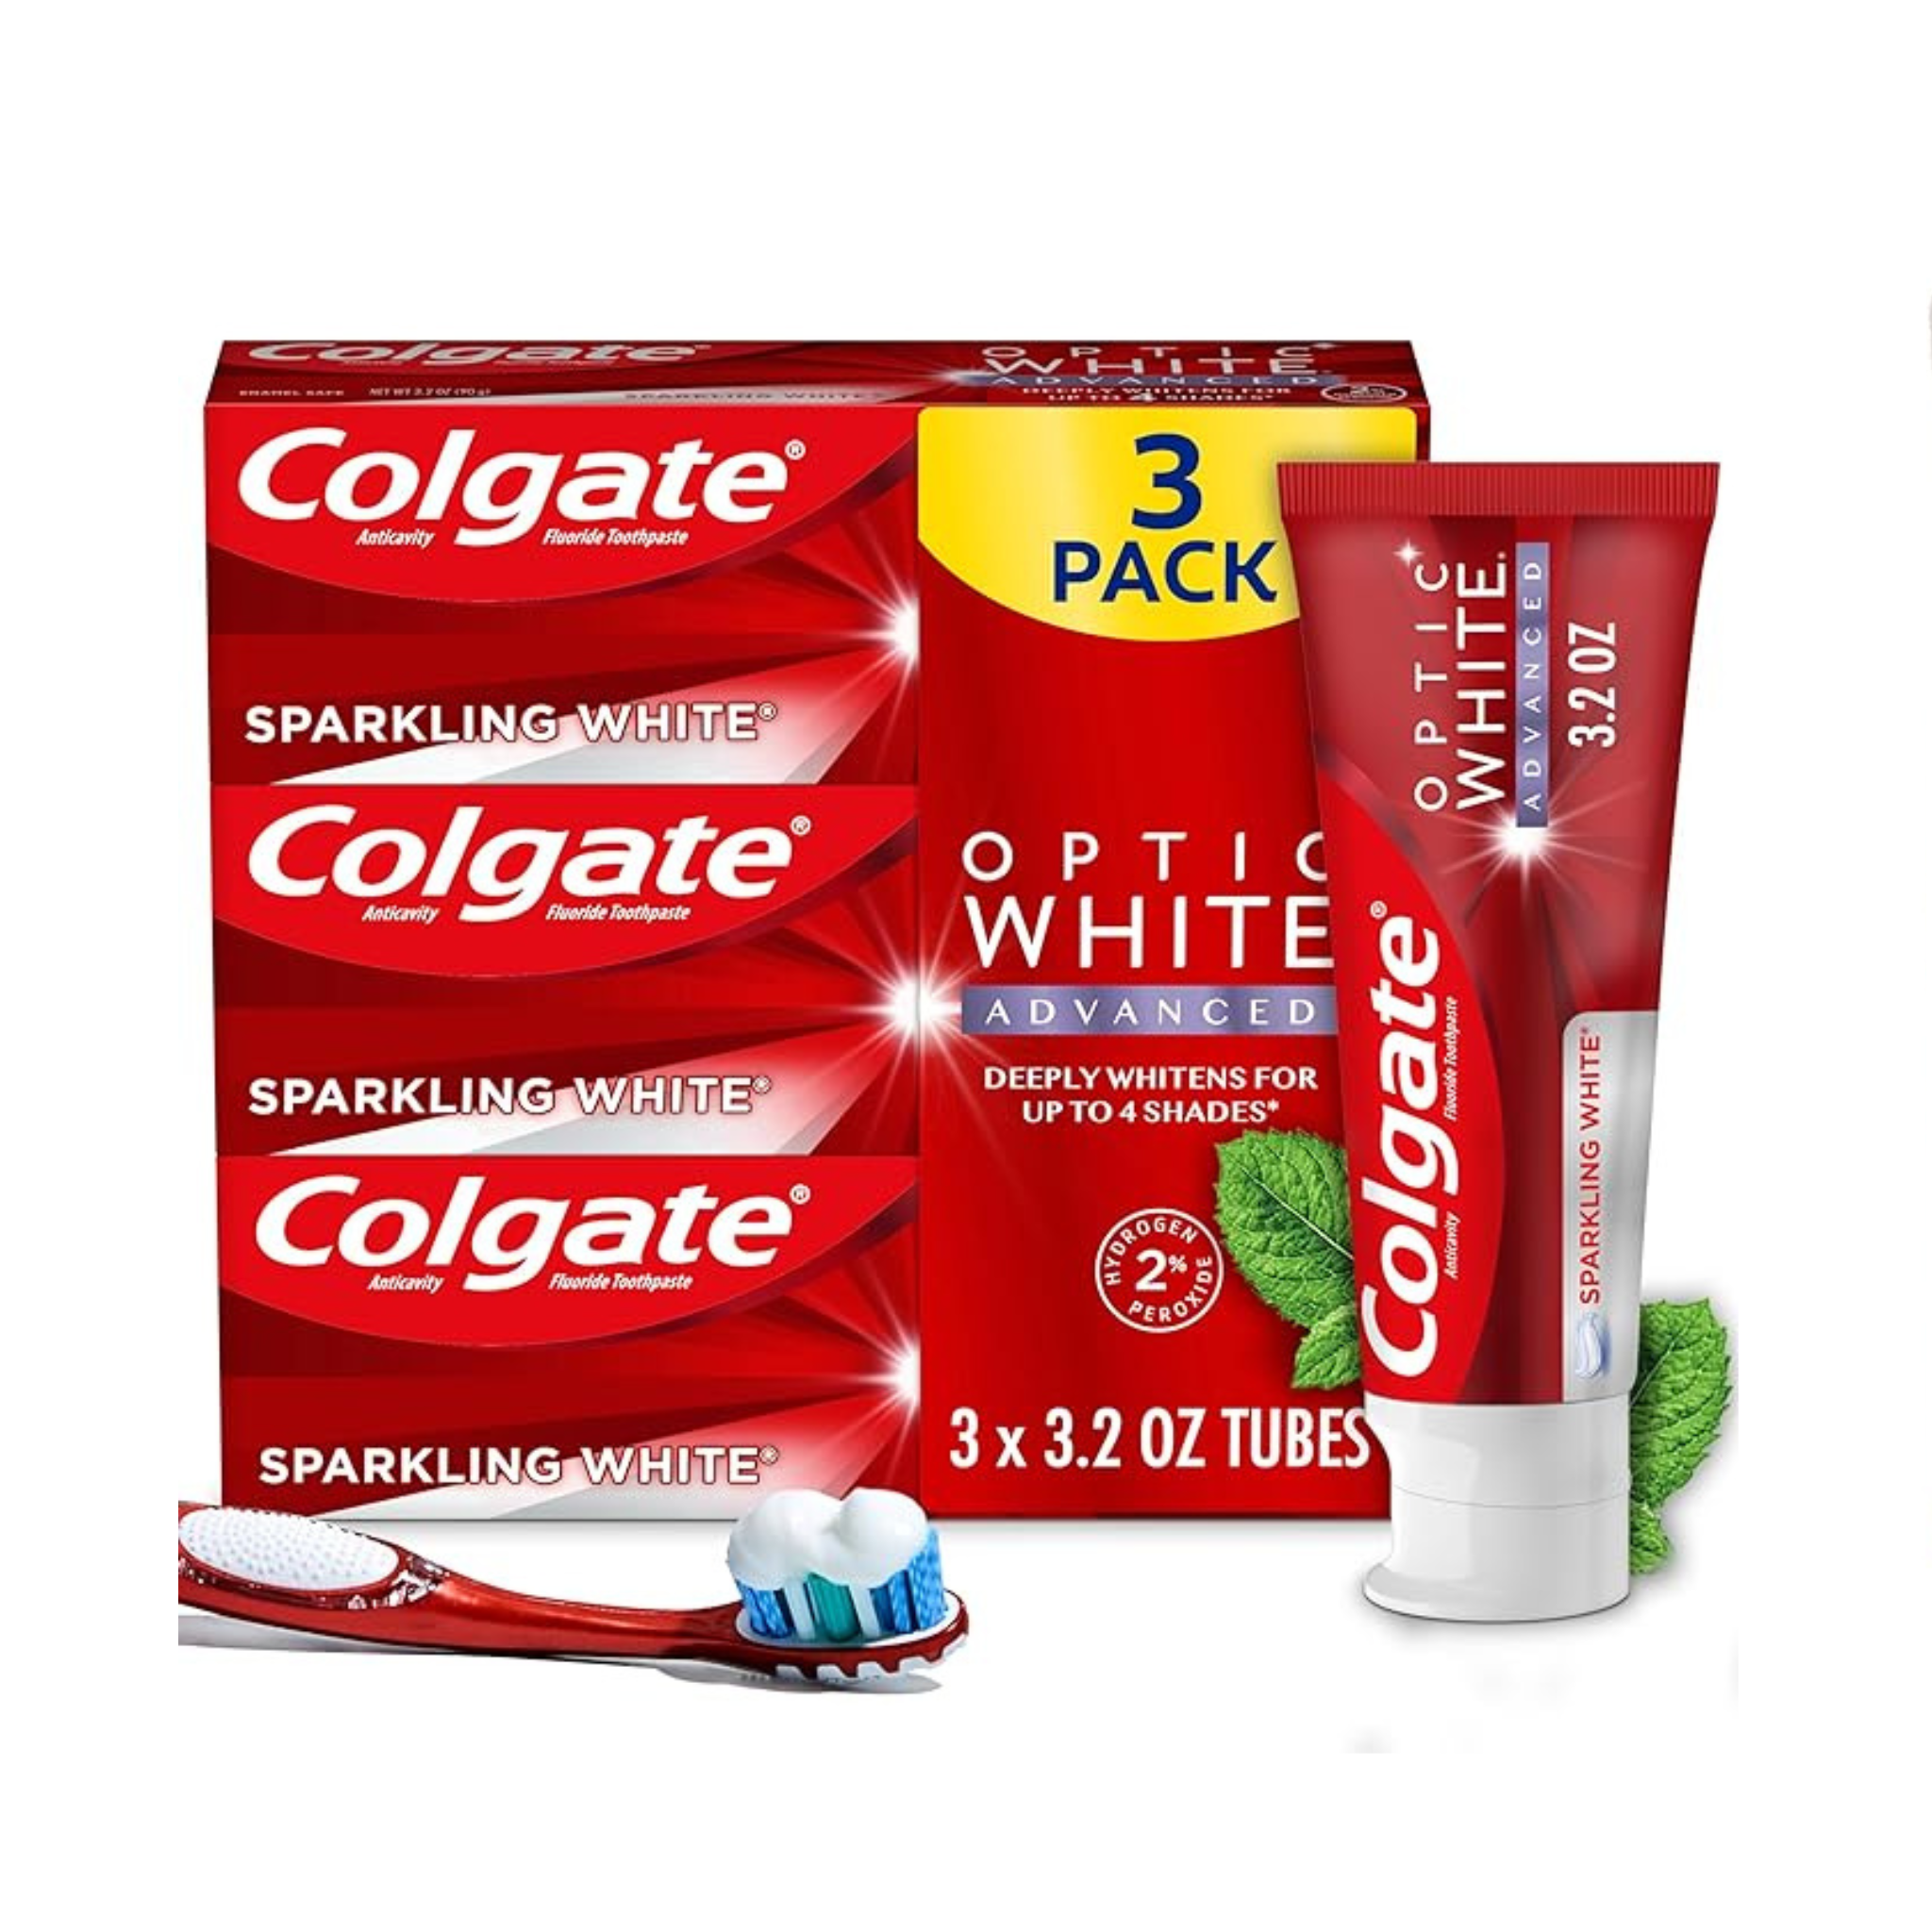 Colgate Optic White Advanced Teeth Whitening Toothpaste (3.2 Oz, 3 Pack)